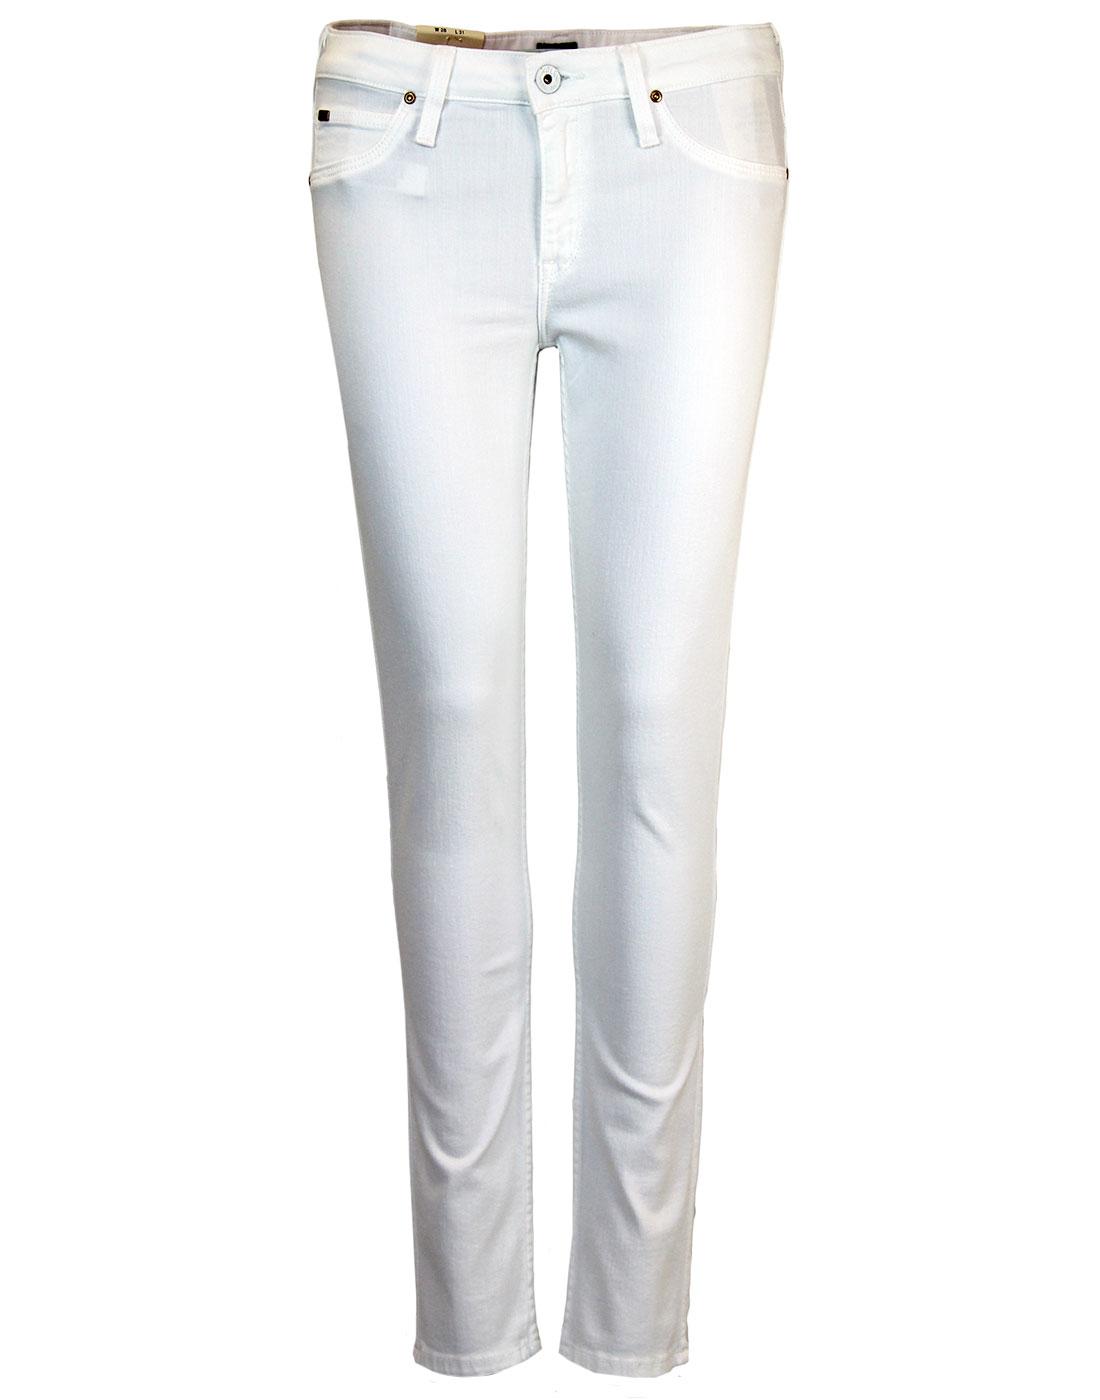 Scarlett LEE Retro Mod White Skinny Denim Jeans